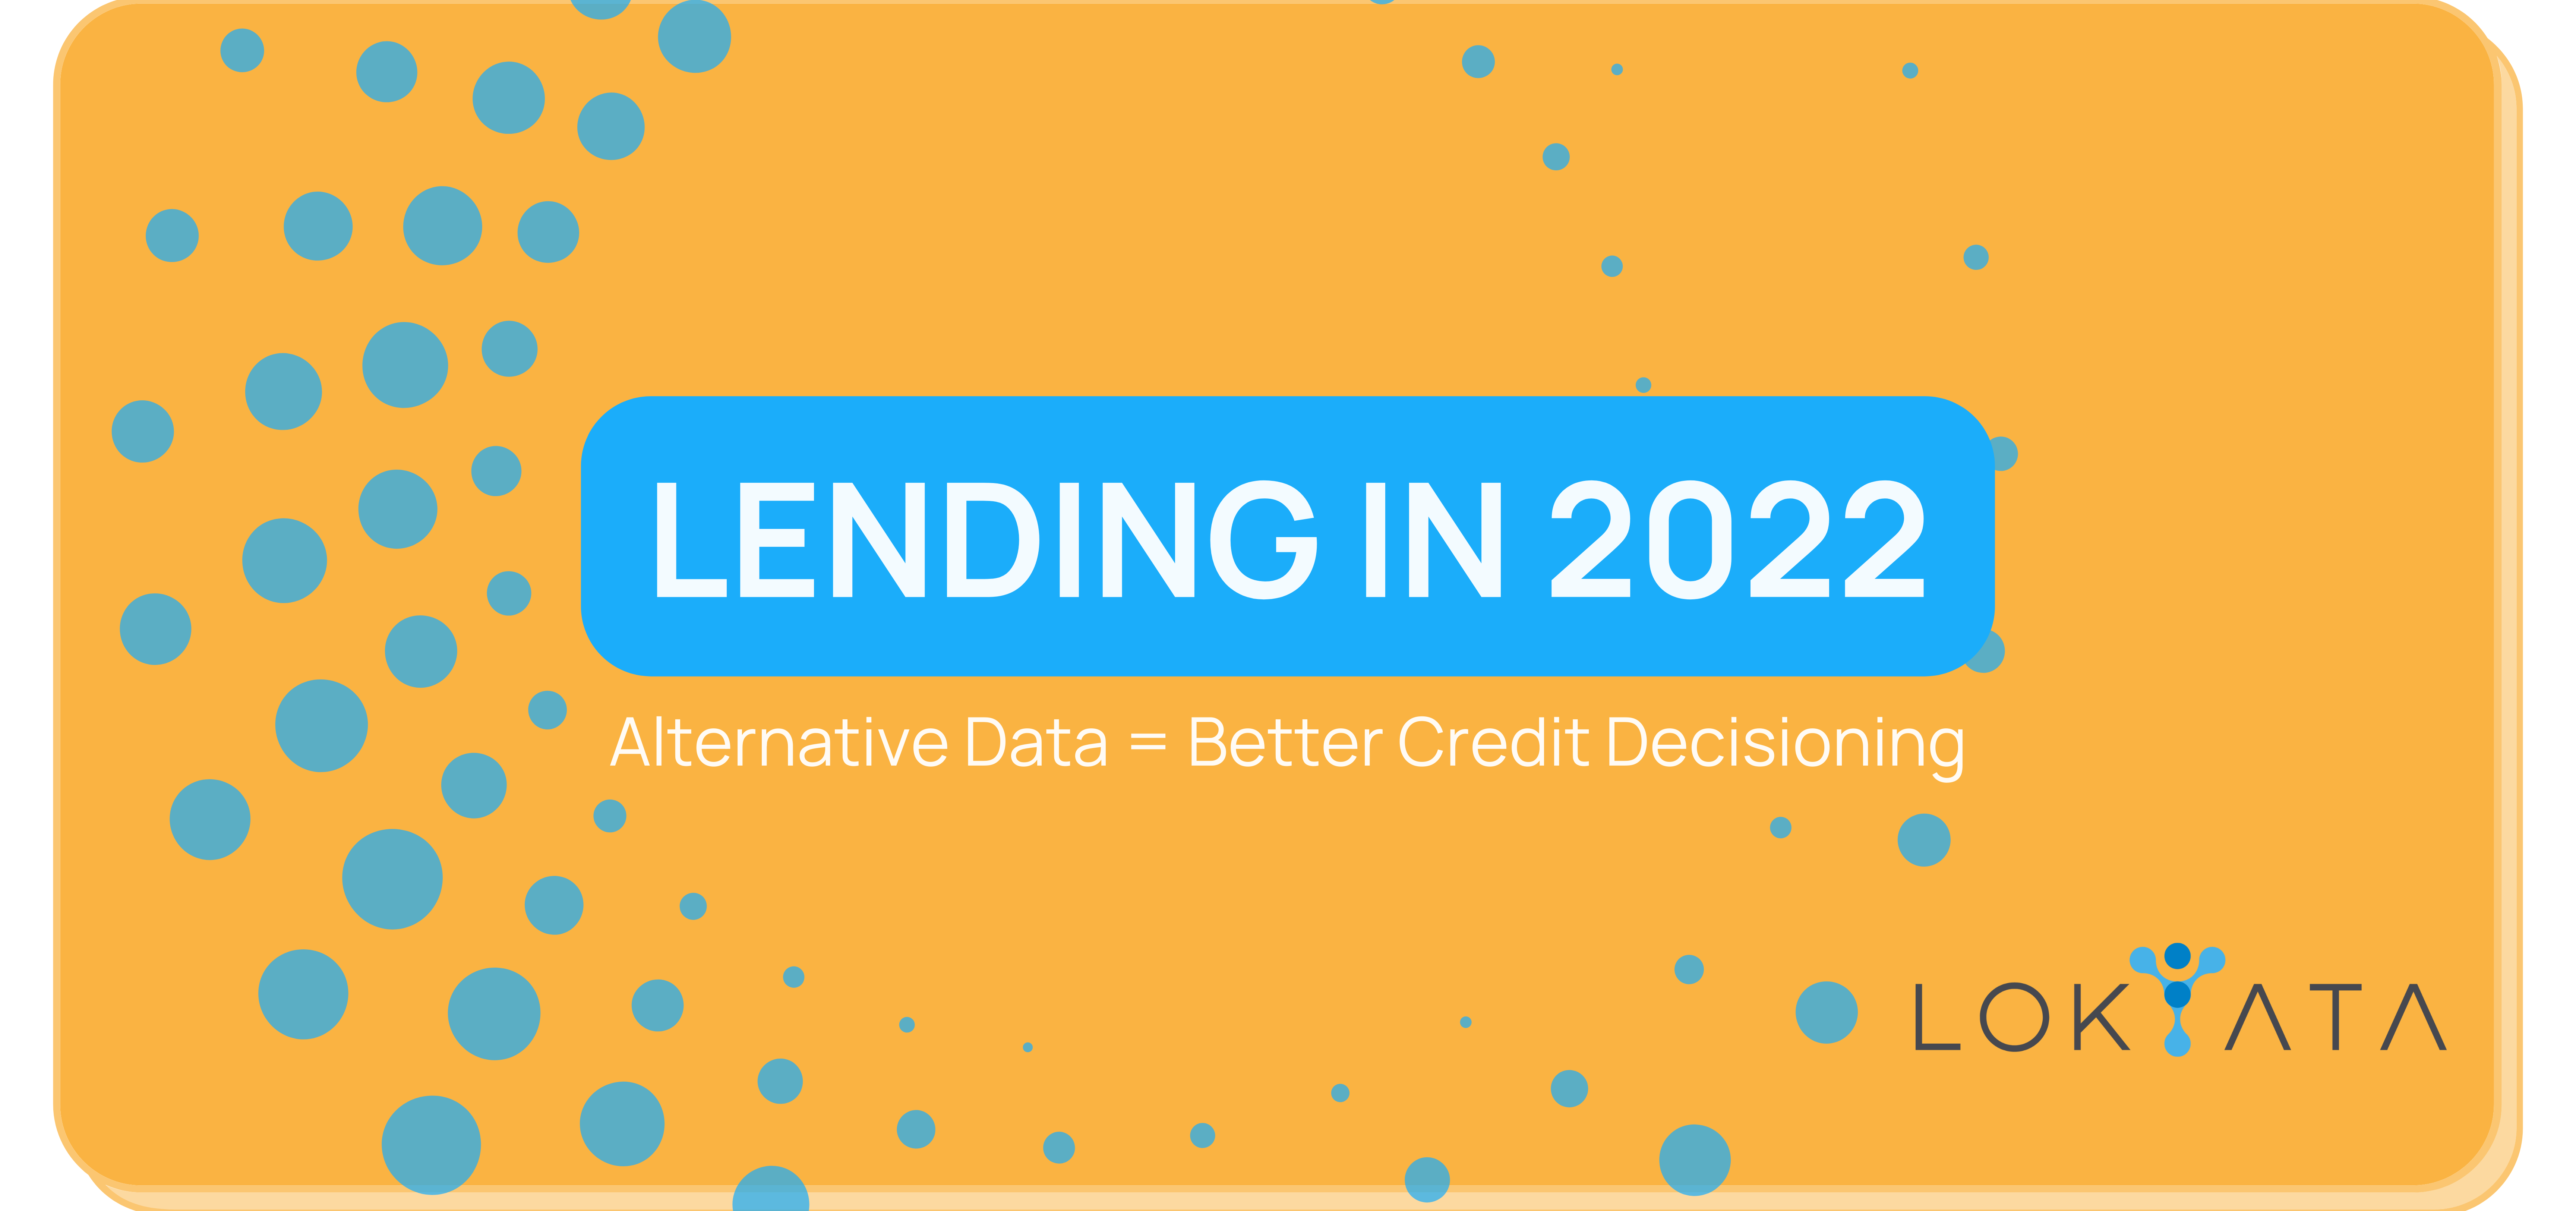 alternative data and credit decisioning